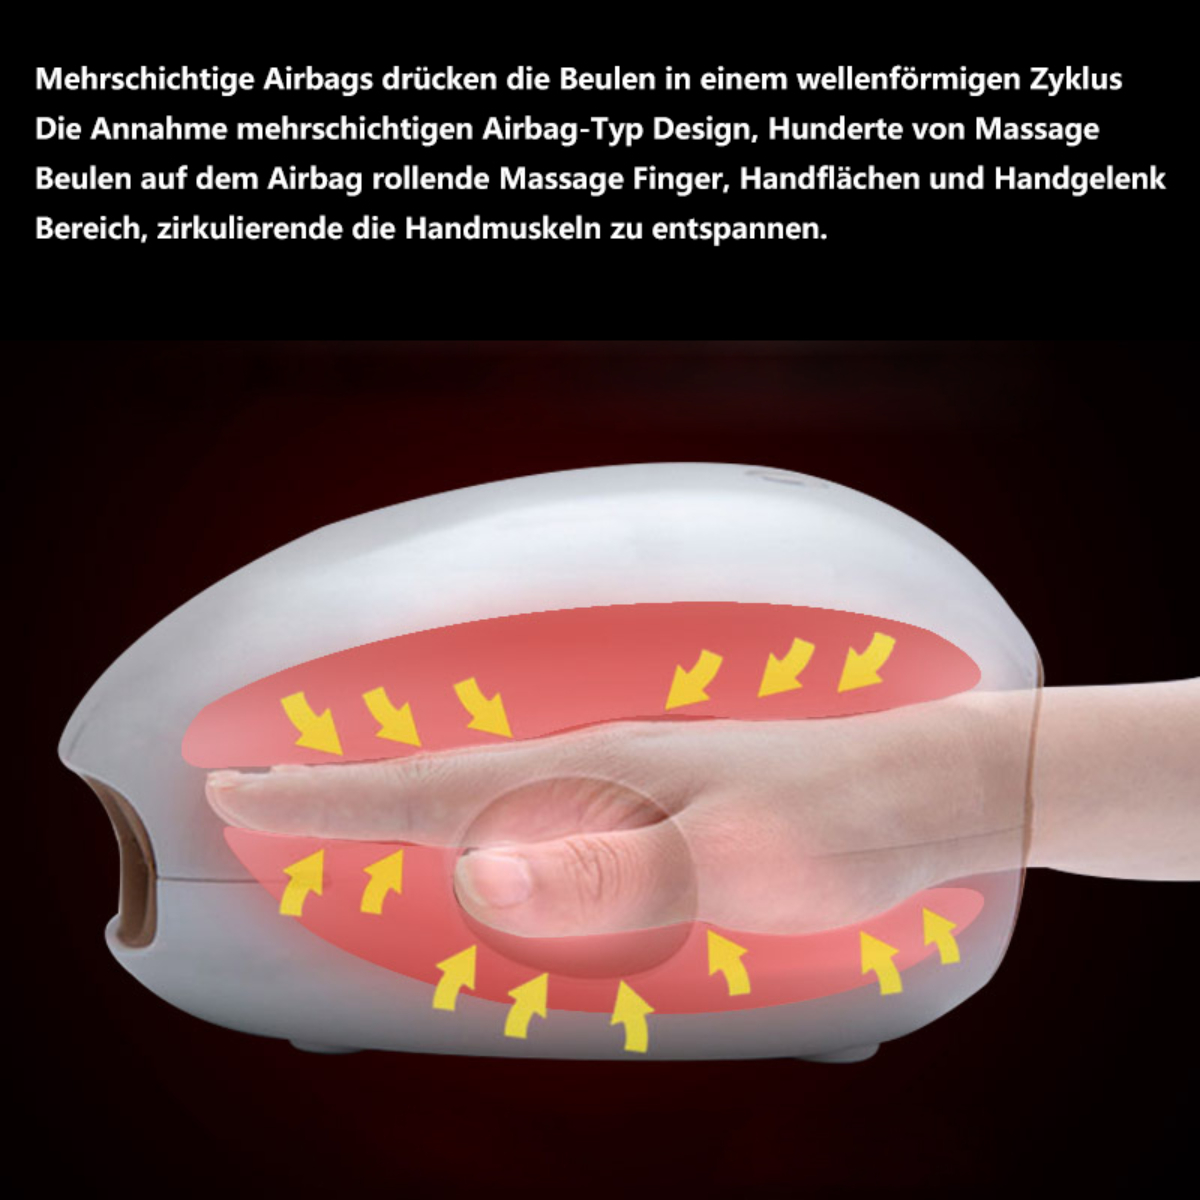 Handmassagegerät Physiotherapie Palm Handmassagegerät Airbag Handmassagegerät Fingergelenk Hot Massager Kneten BYTELIKE